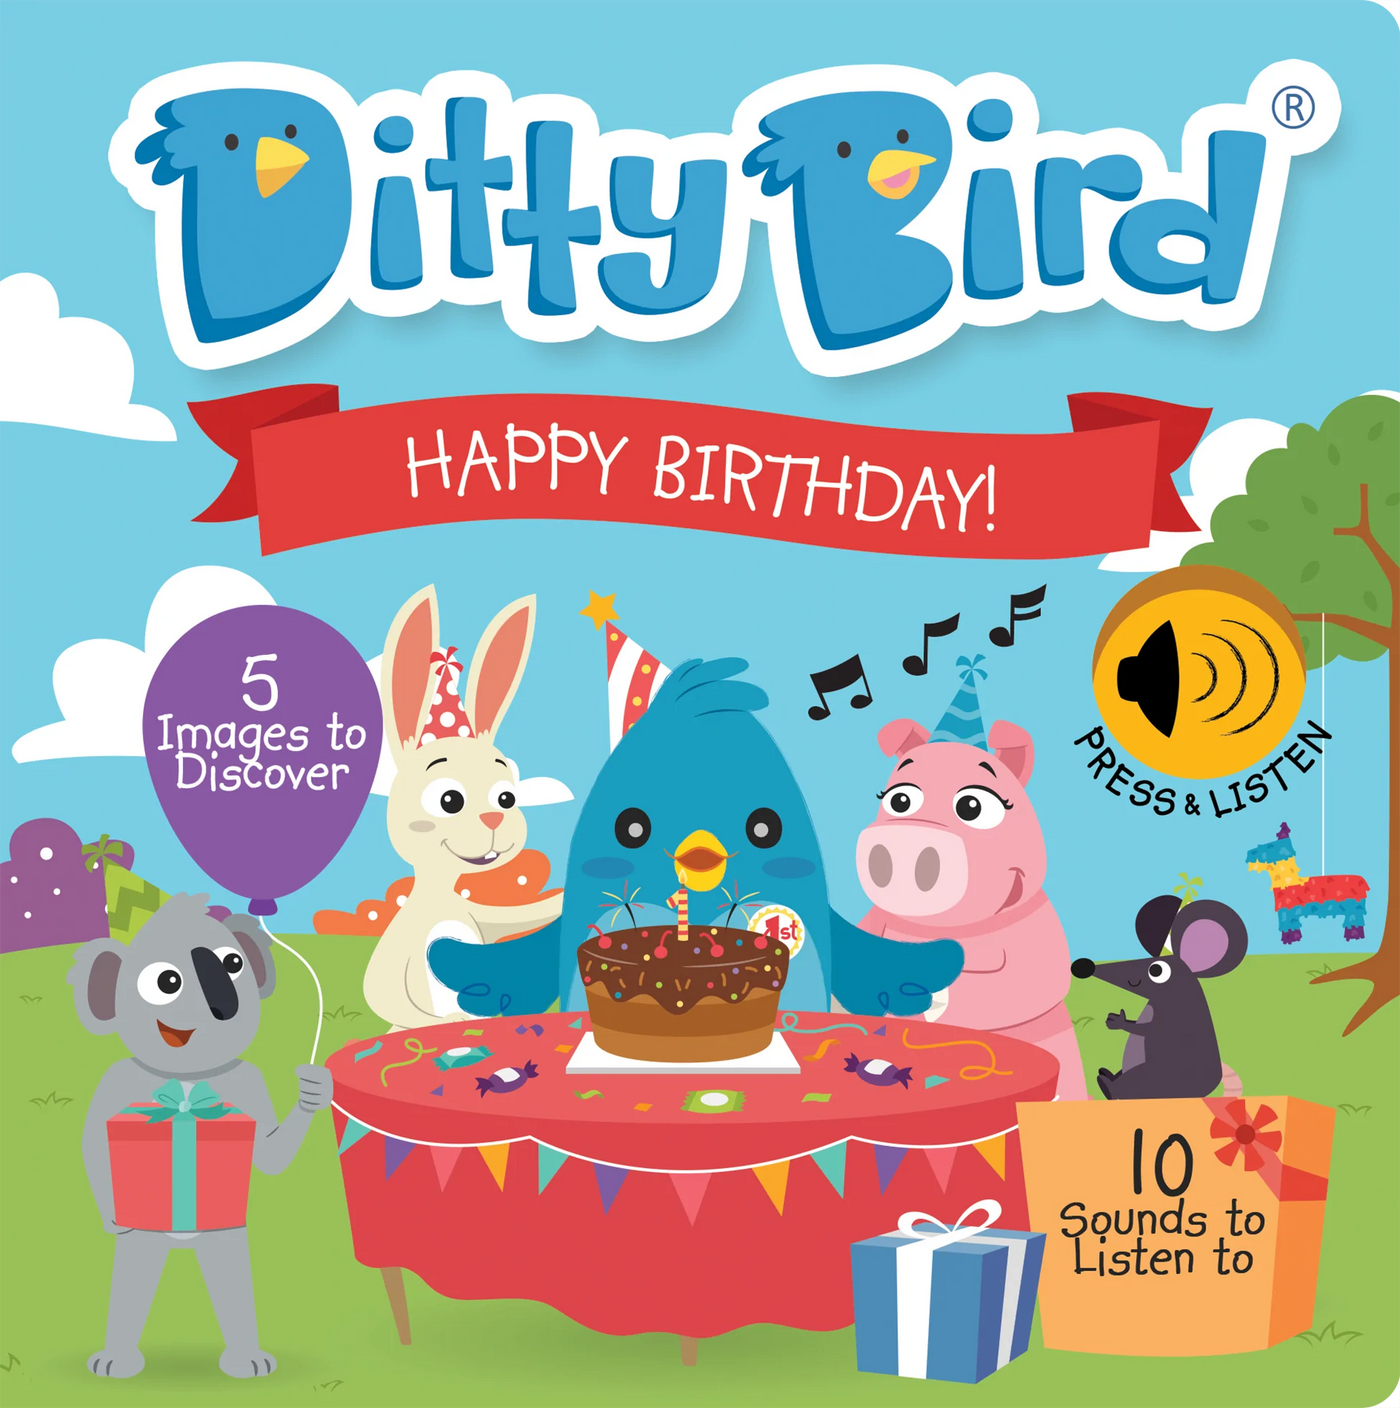 Ditty Bird- Happy Birthday